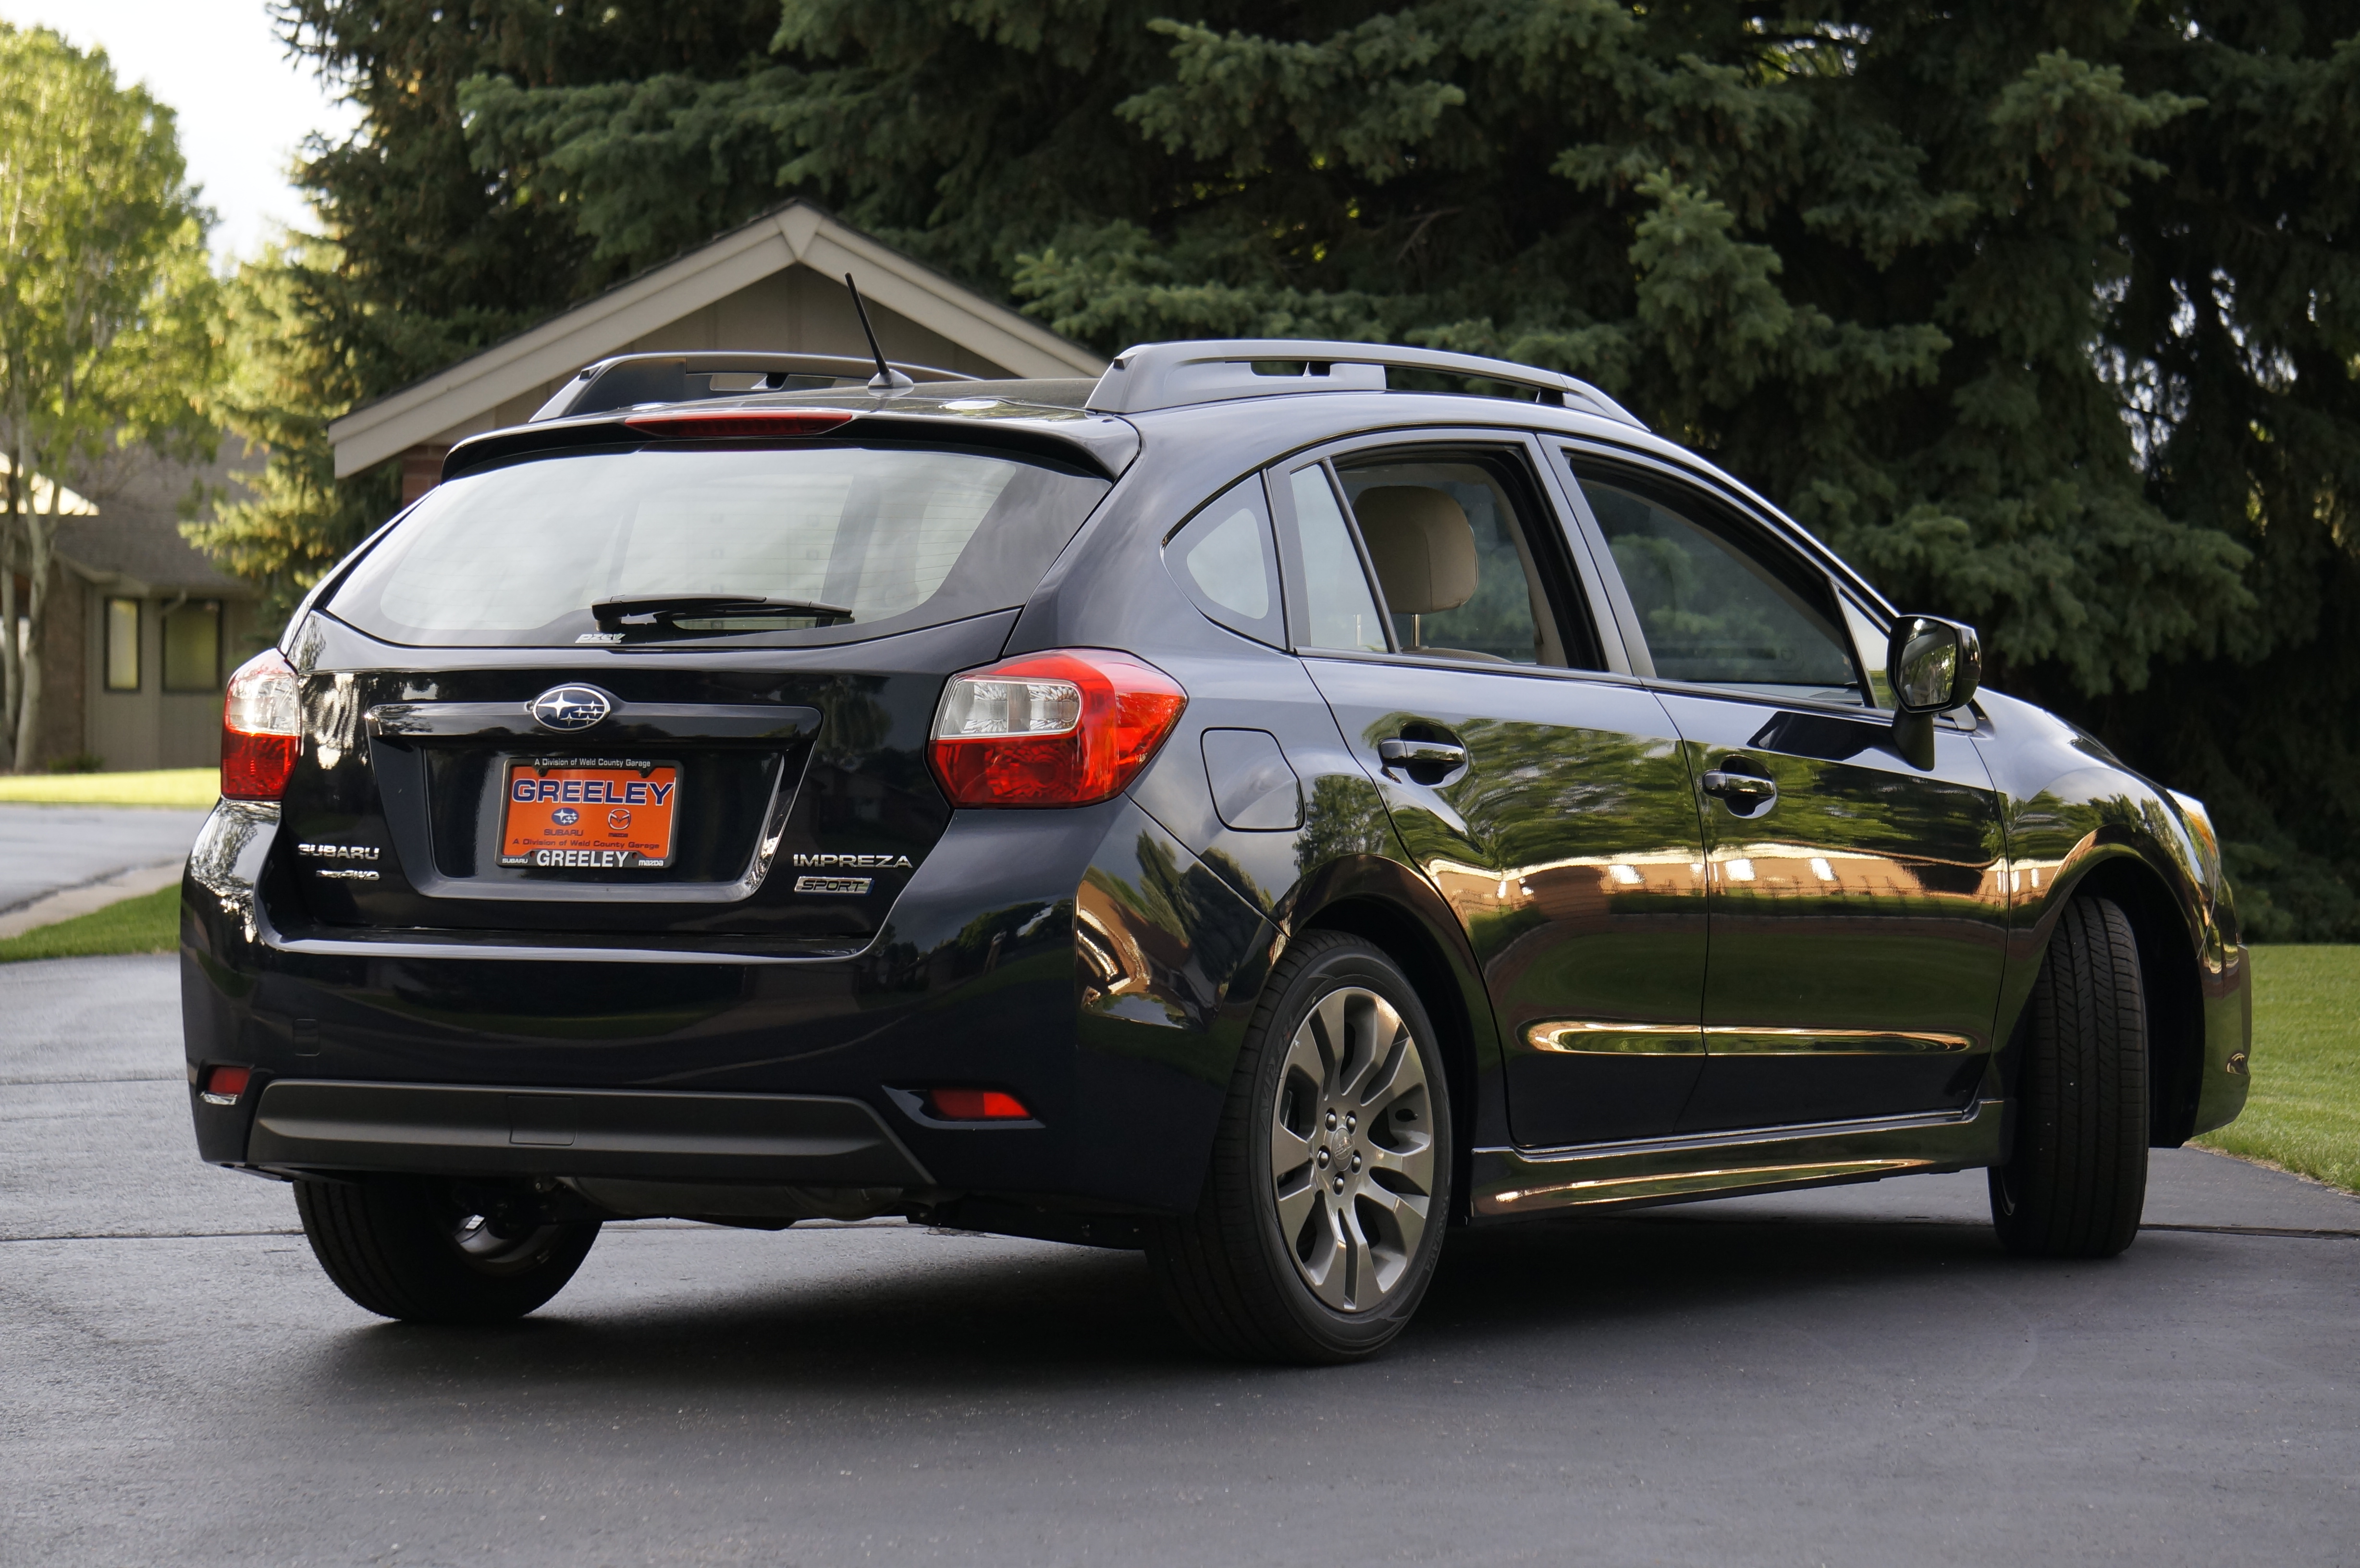 Subaru Impreza Hatchback exterior specifications